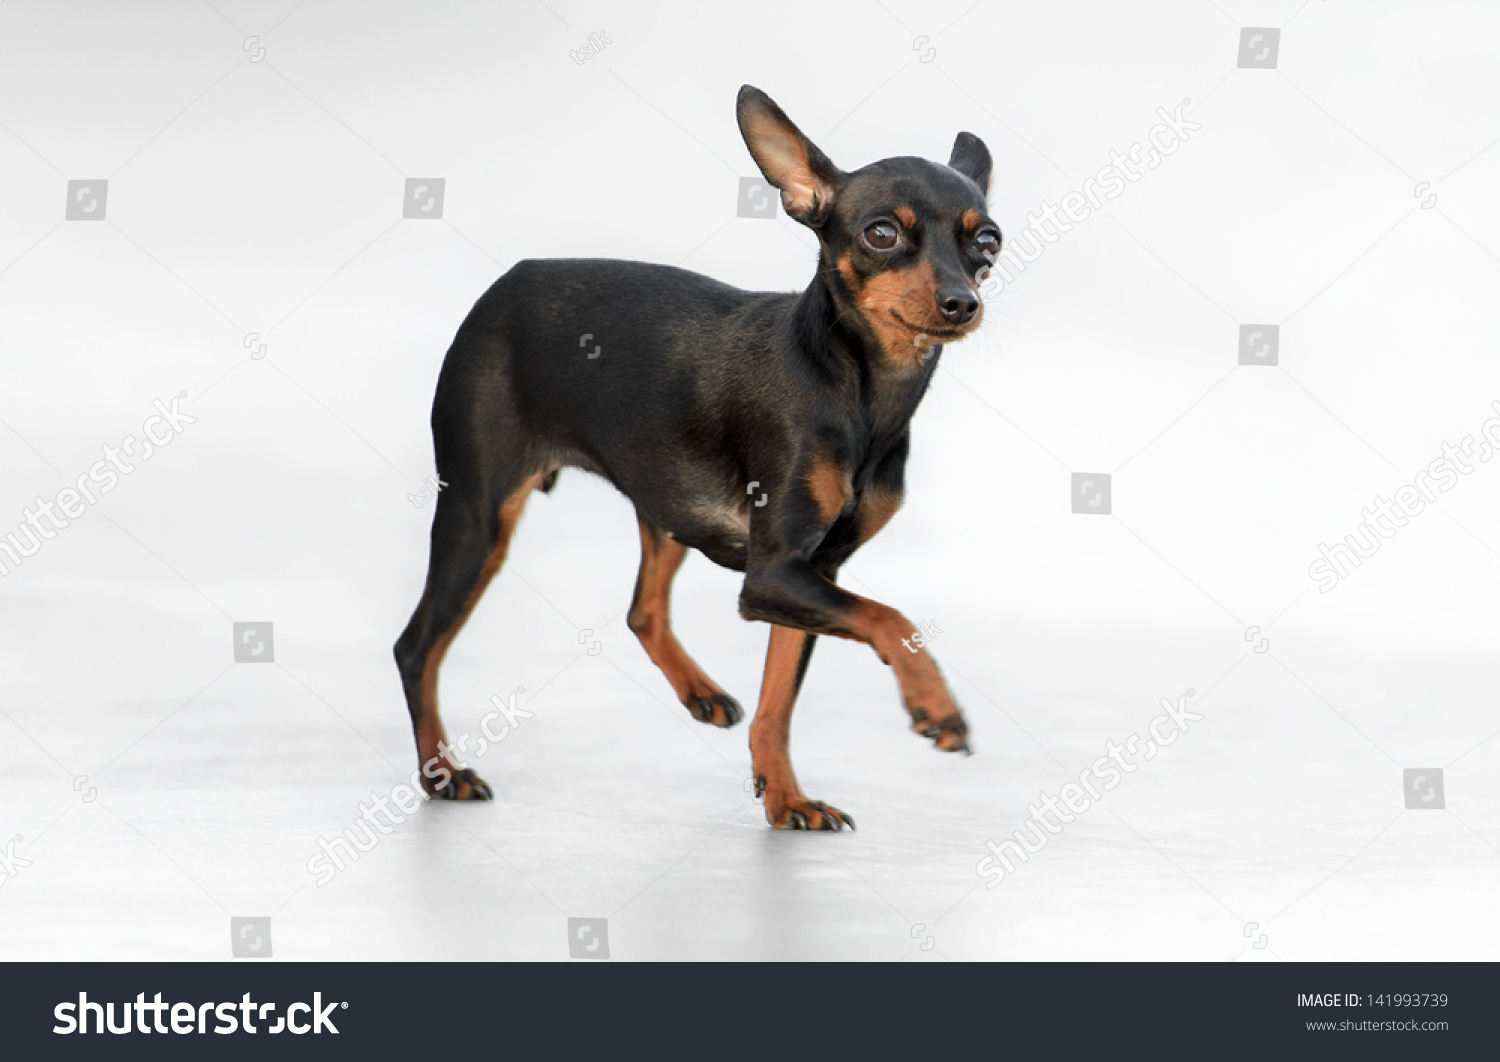 Male Pincher Toy Dog Stock Photo 141993739 - Shutterstock